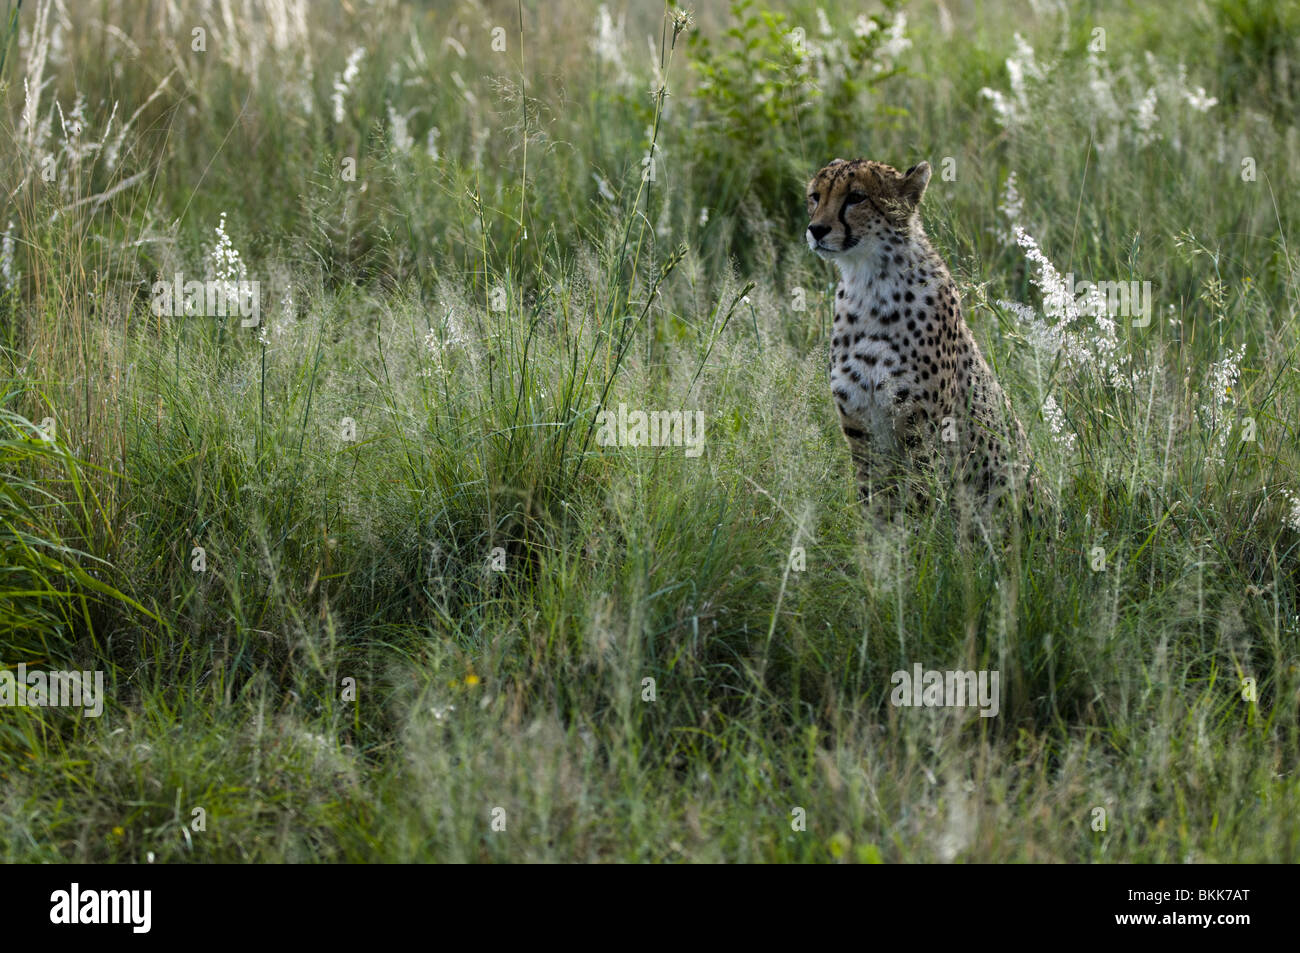 Cheetah in long grass, Namibia. Stock Photo